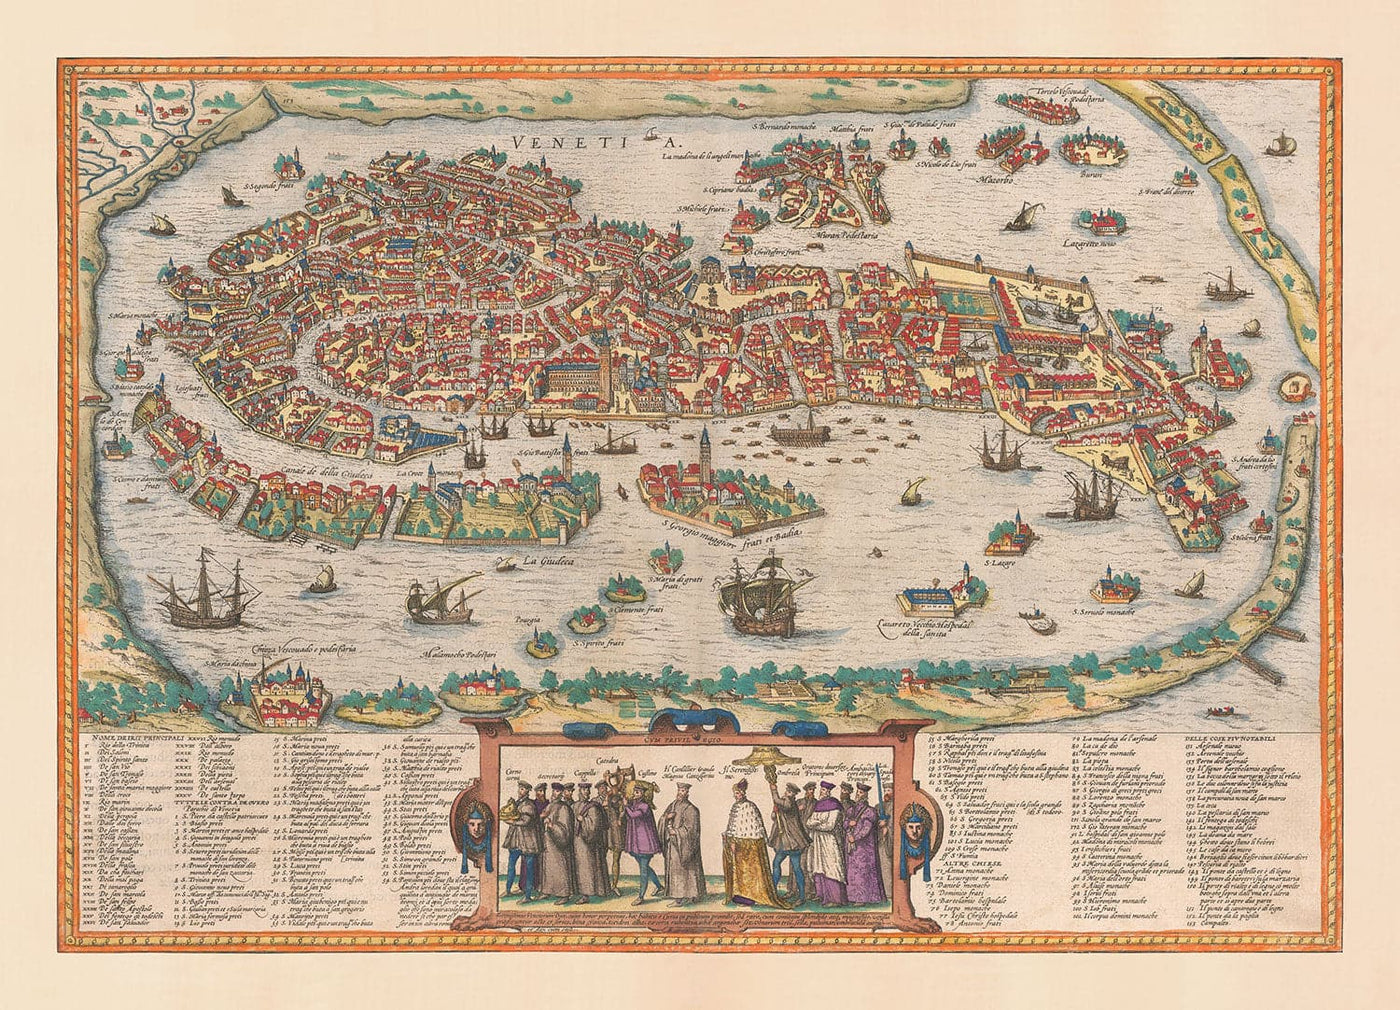 Sehr alte Karte von Venedig, 1572 von Georg Braun - Venezia, Murano, Burano, Giudecca, Venezianische Lagune